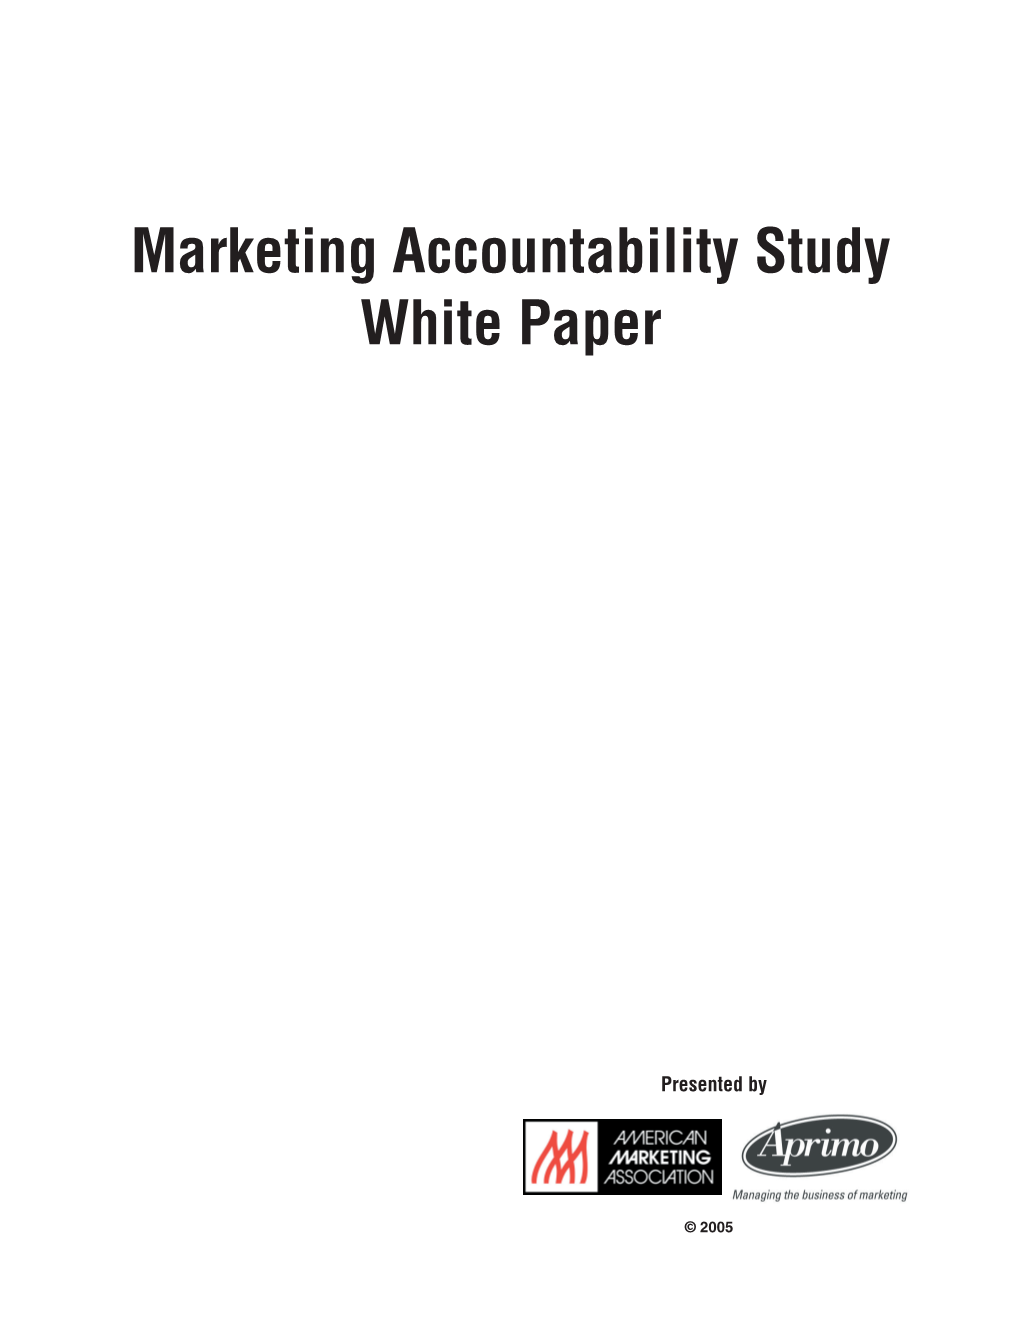 Marketing Accountability Study White Paper